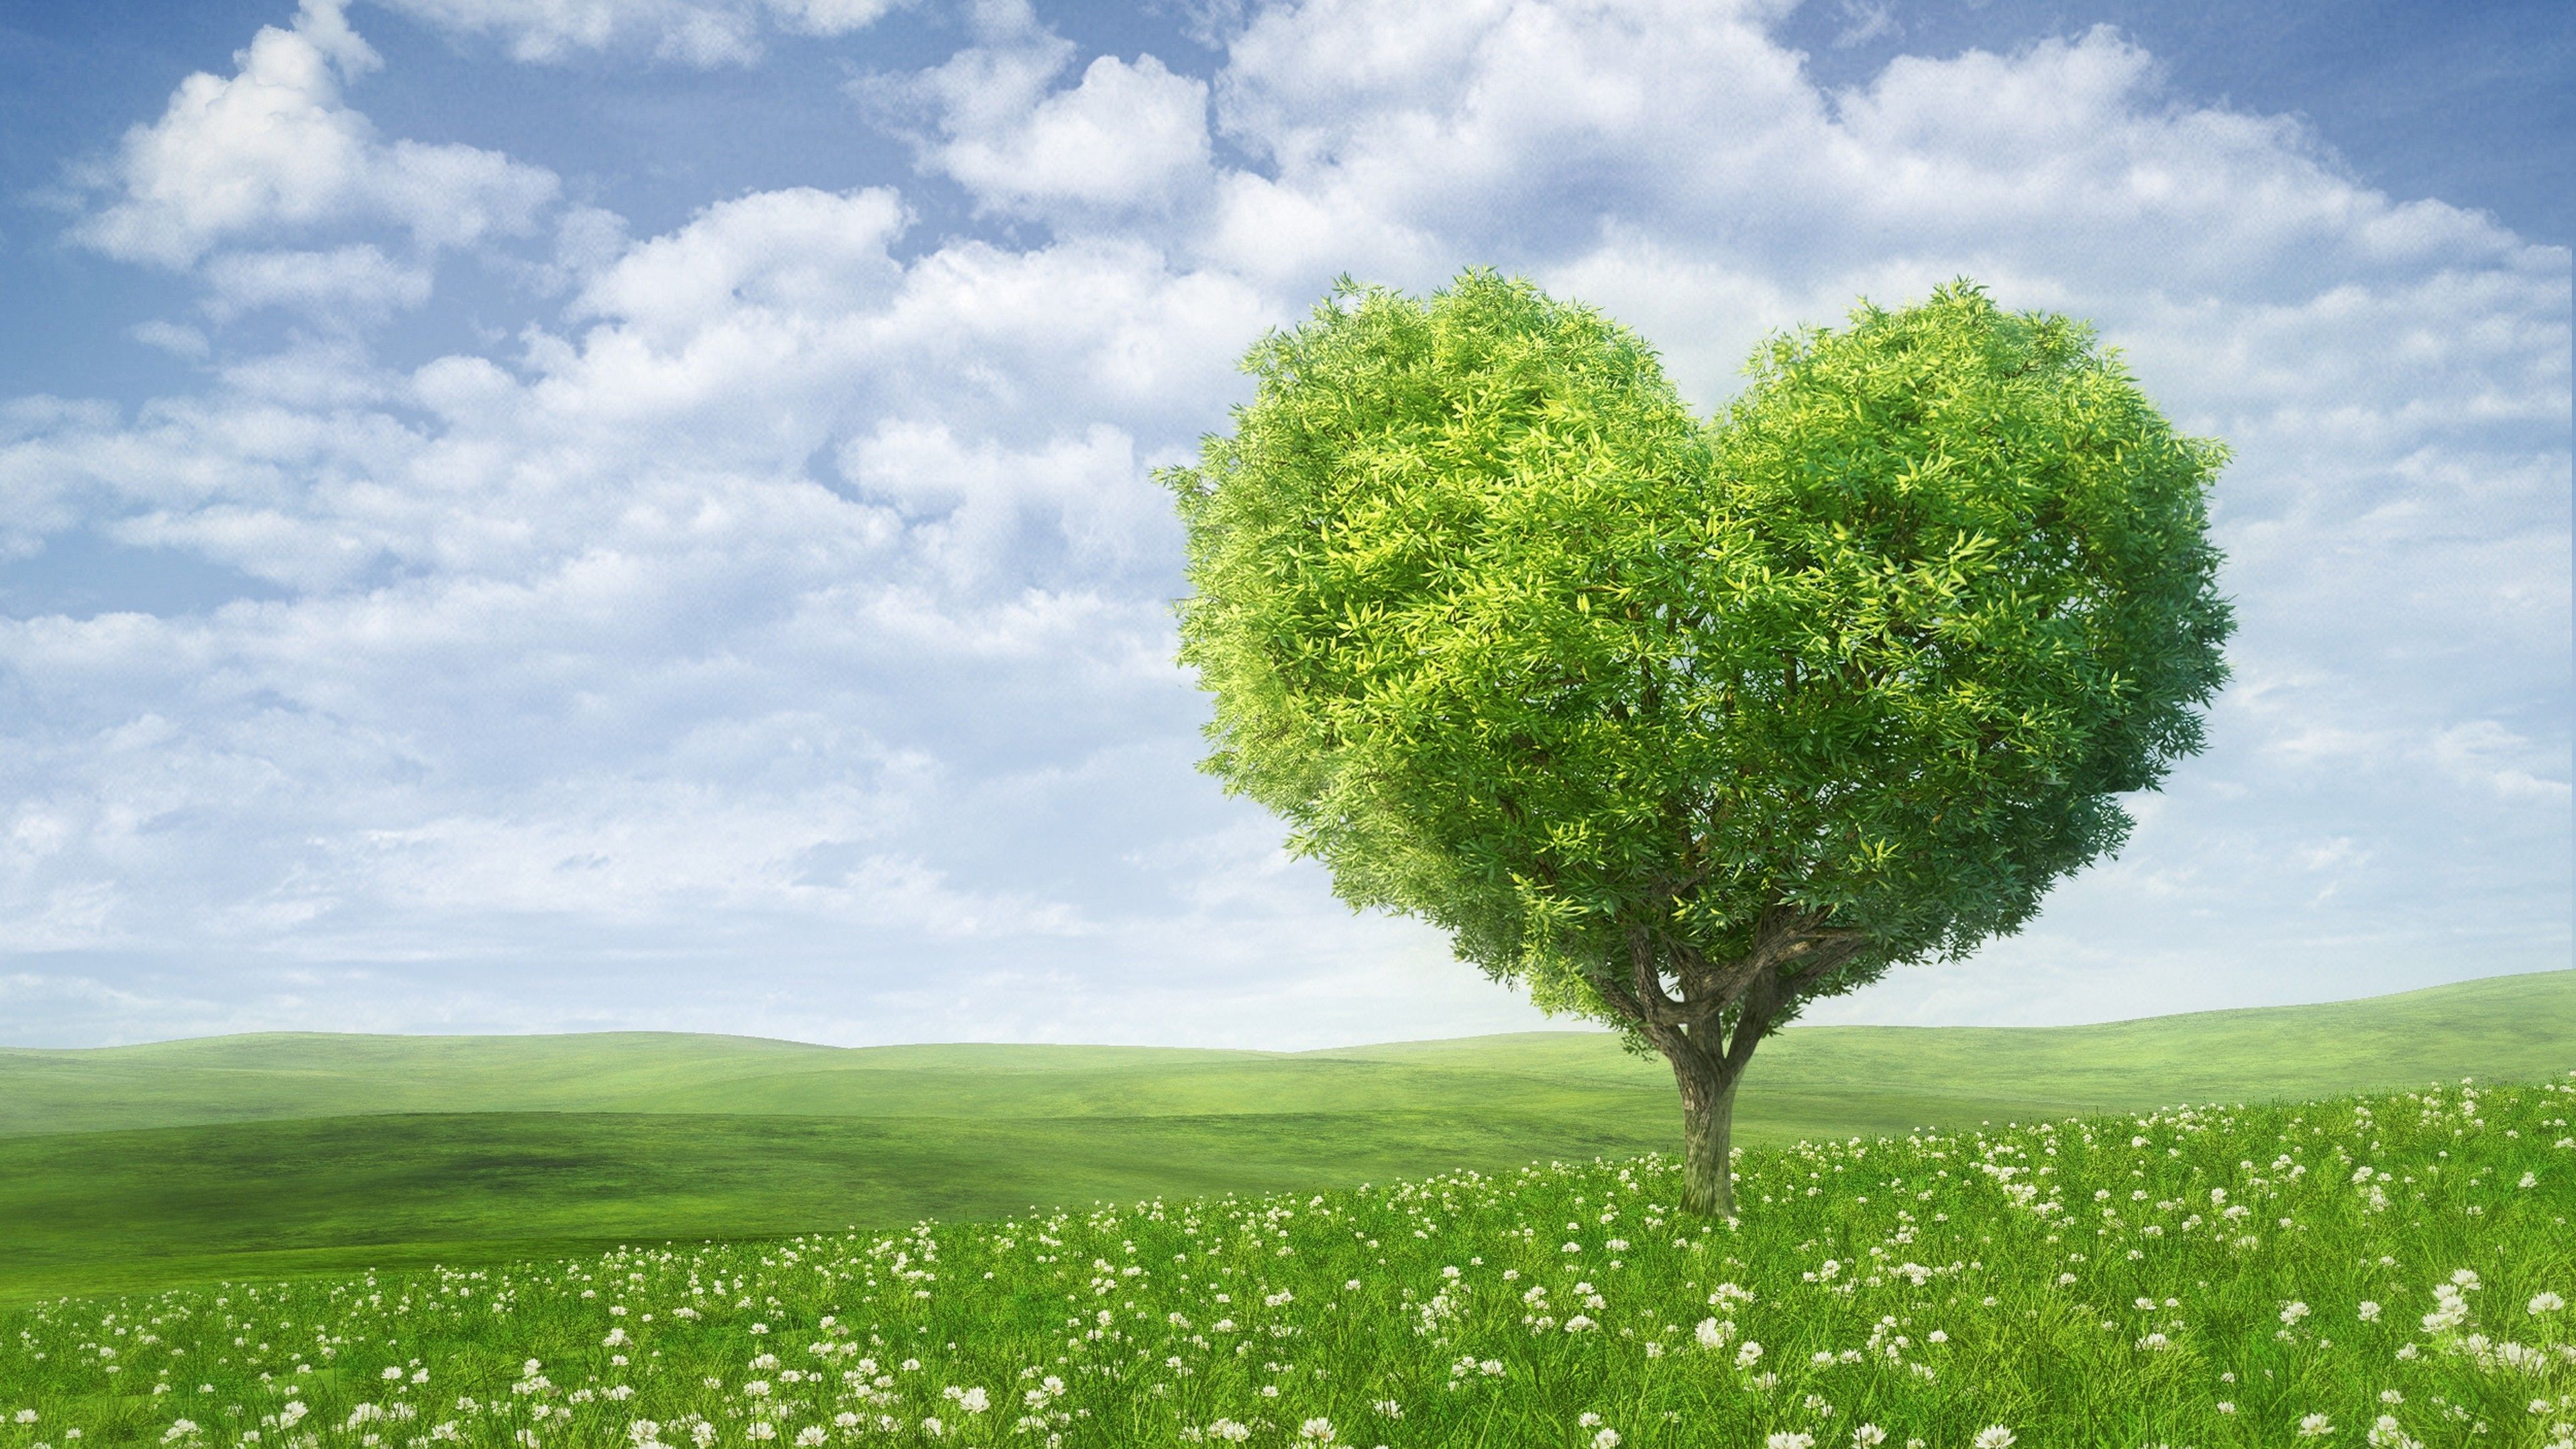 Stock Image love image, heart, tree, 5k, Stock Image